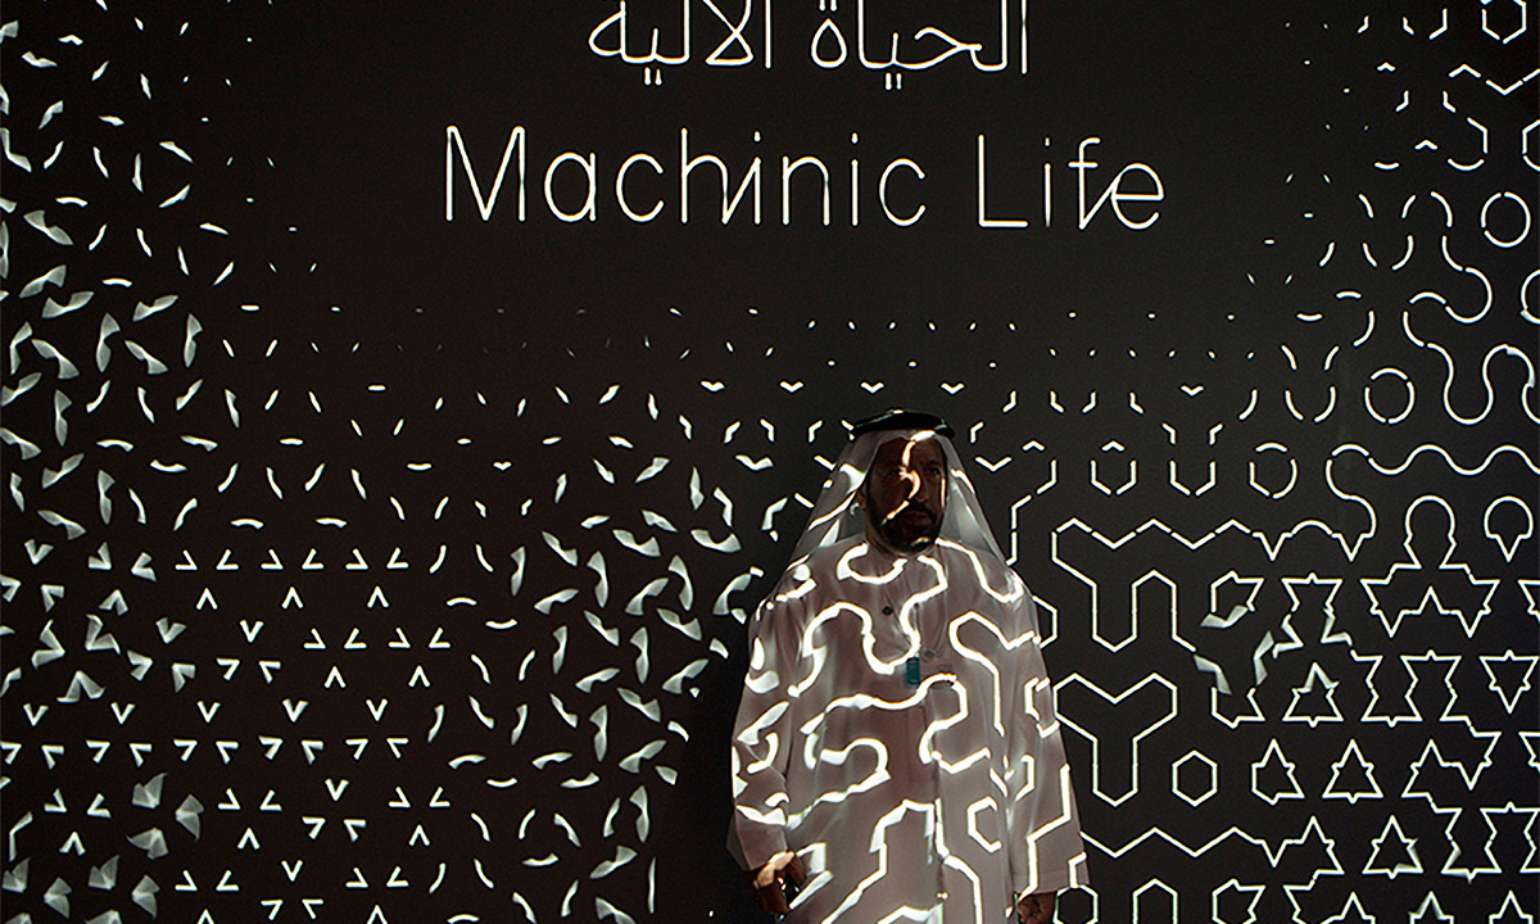 machinic-life-2@2x-1